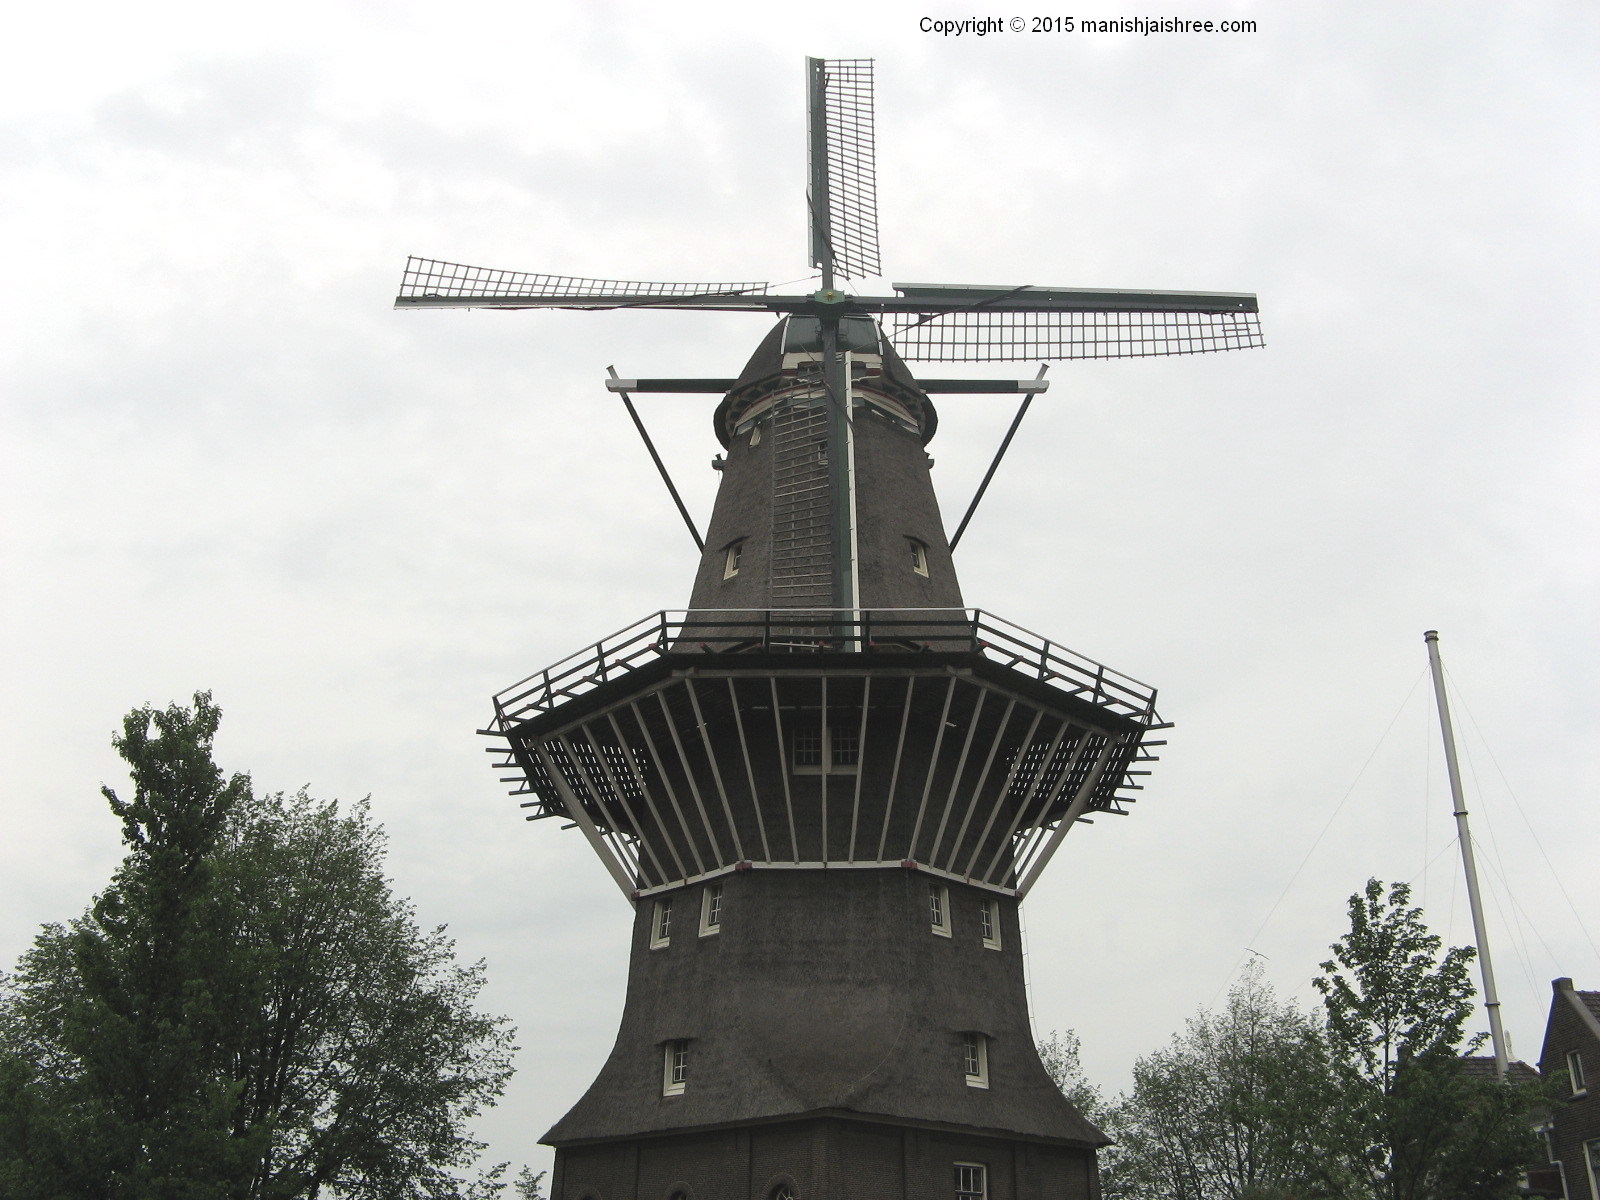 The windmill, Amsterdam